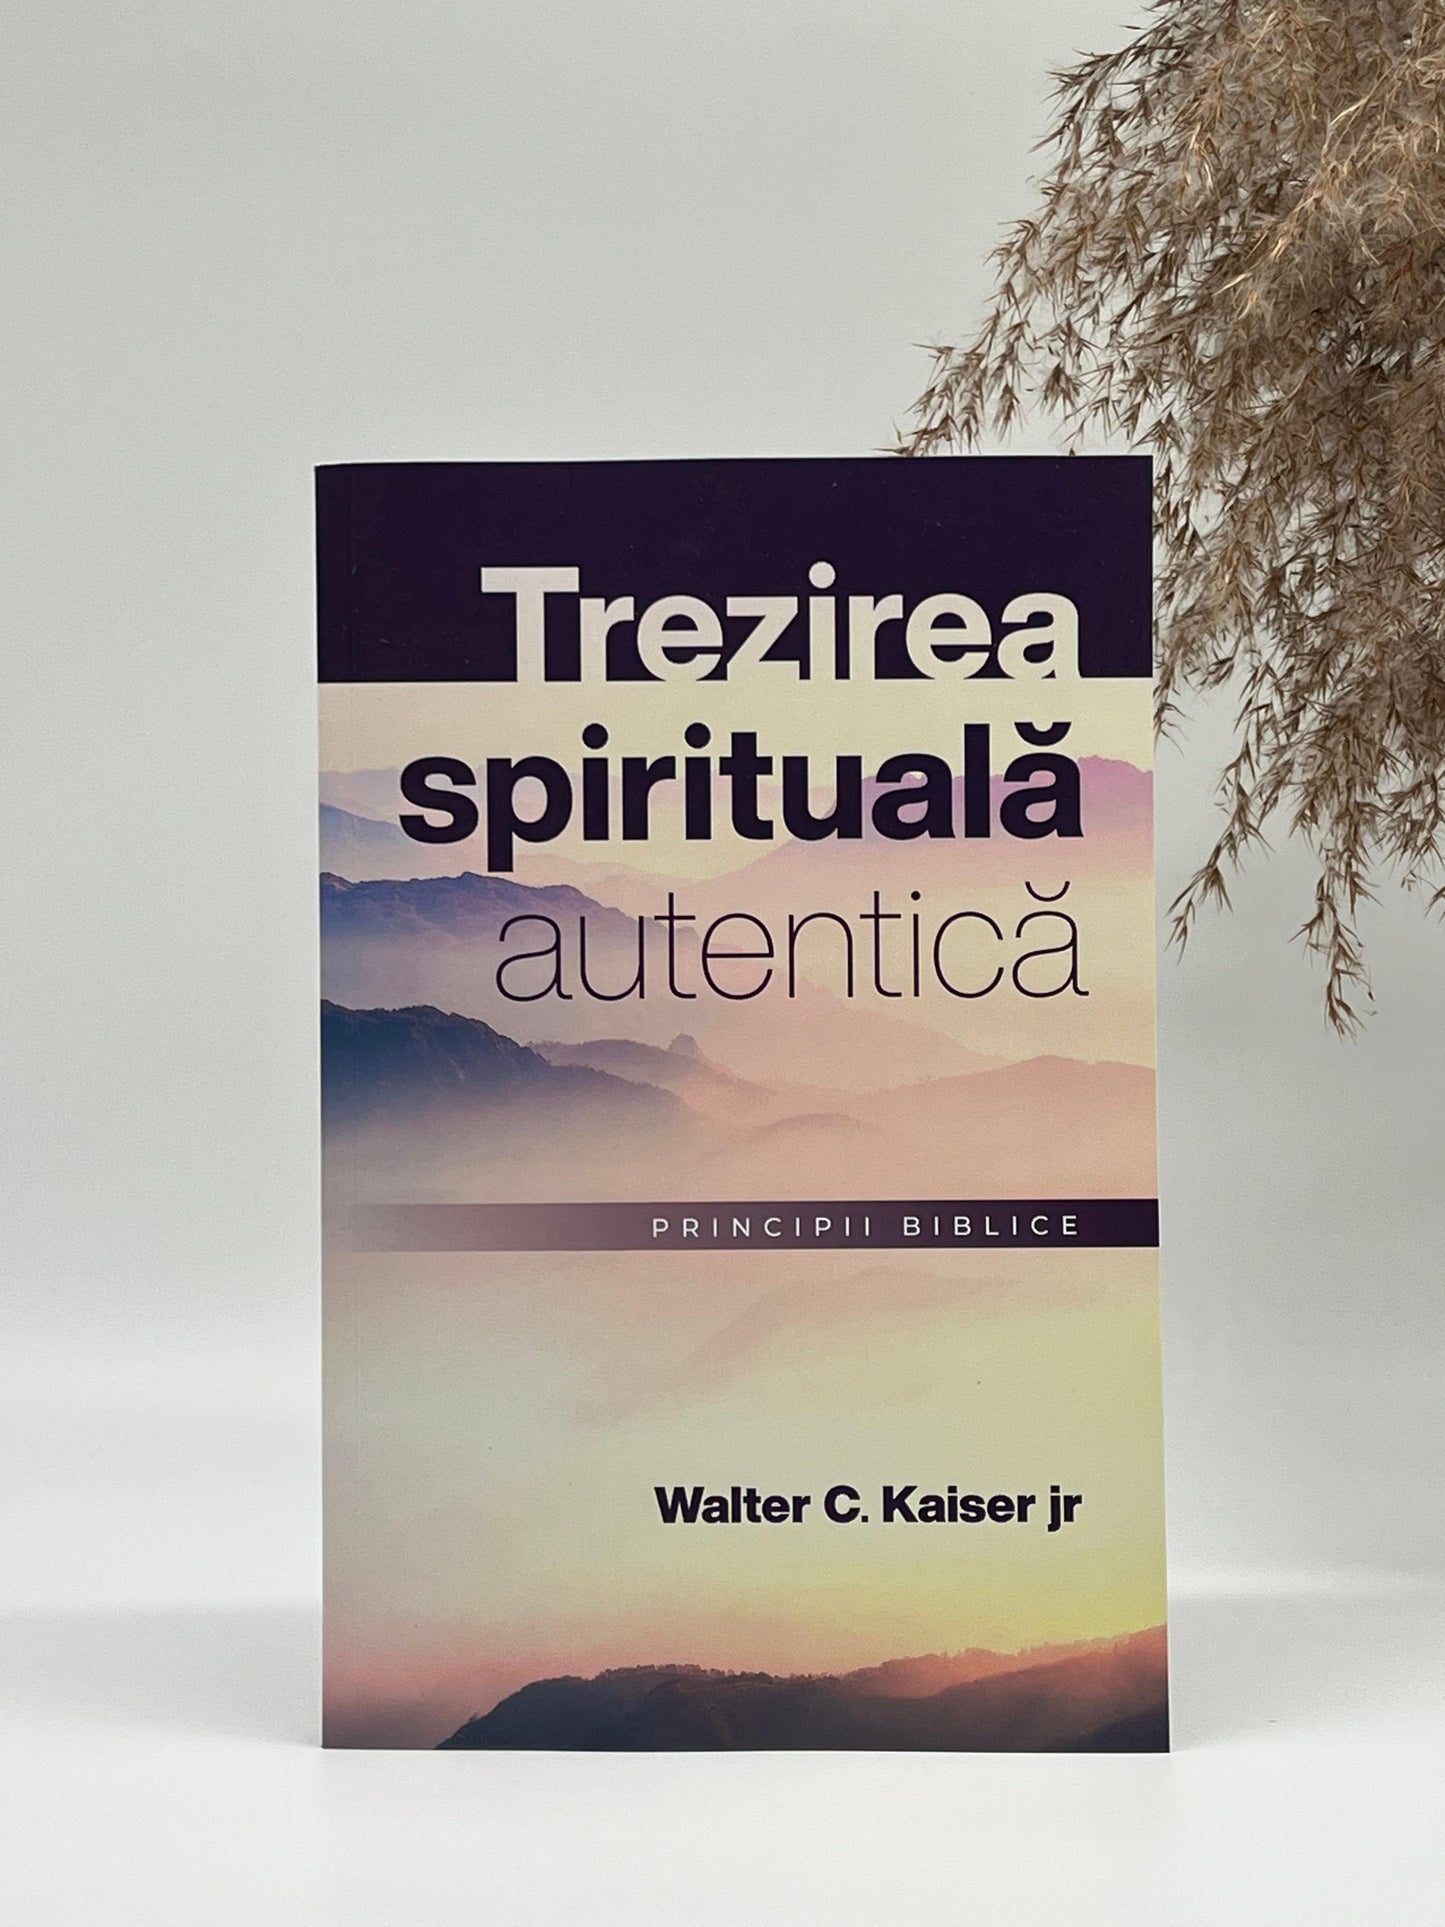 Trezirea spirituală autentică - 
Walter C. Kaiser Jr.